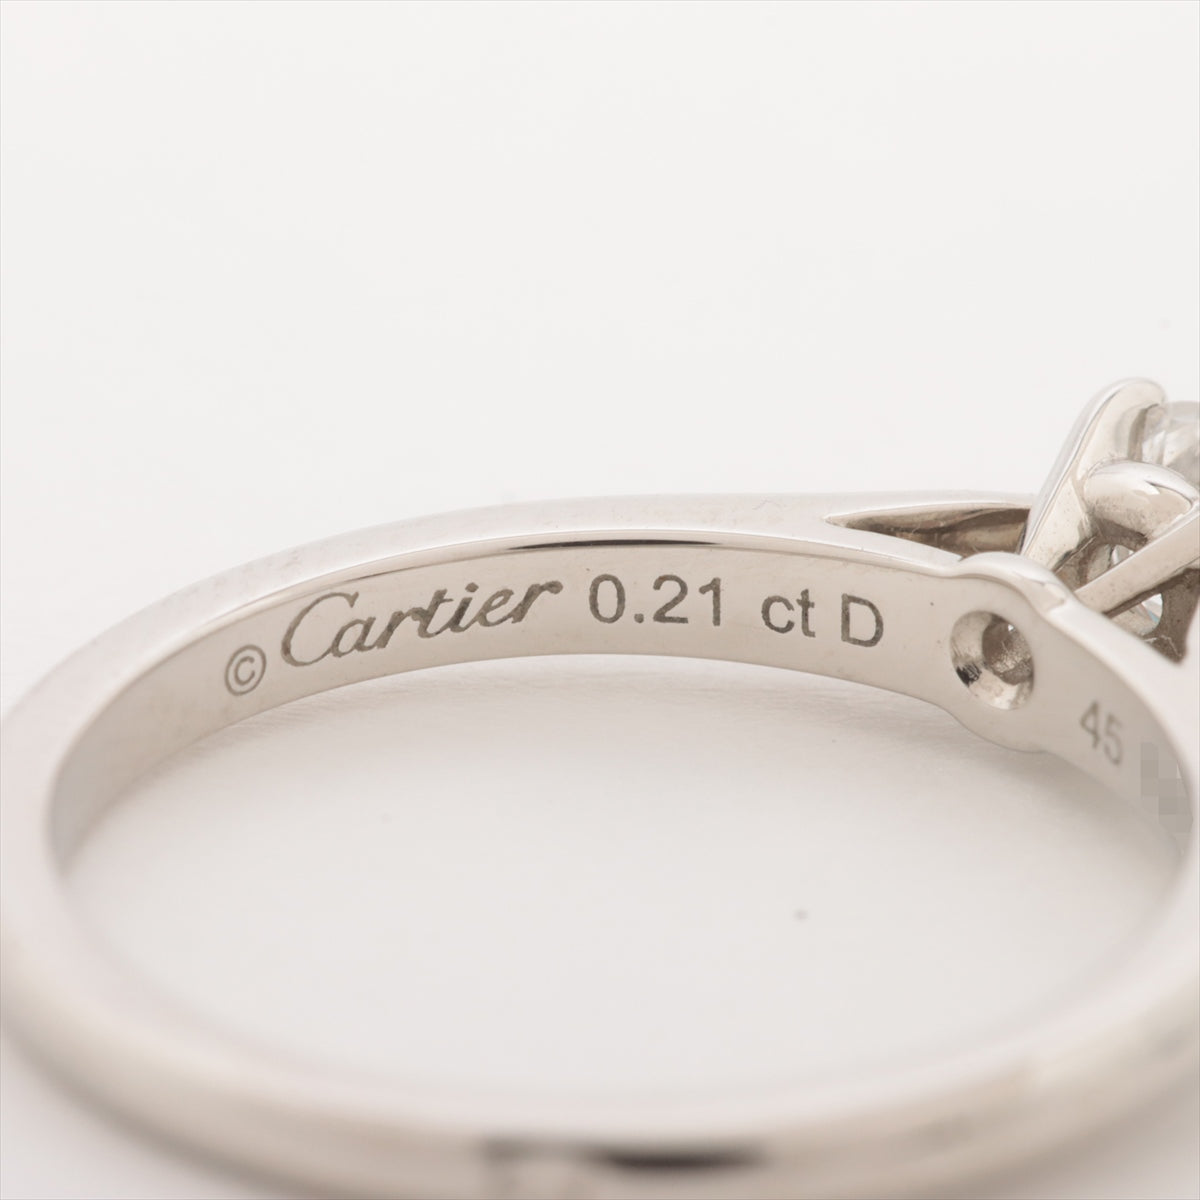 Cartier Solitaire 1895 Diamond Ring Pt950 2.8g 0.21 E VVS1 EX NONE 45 E